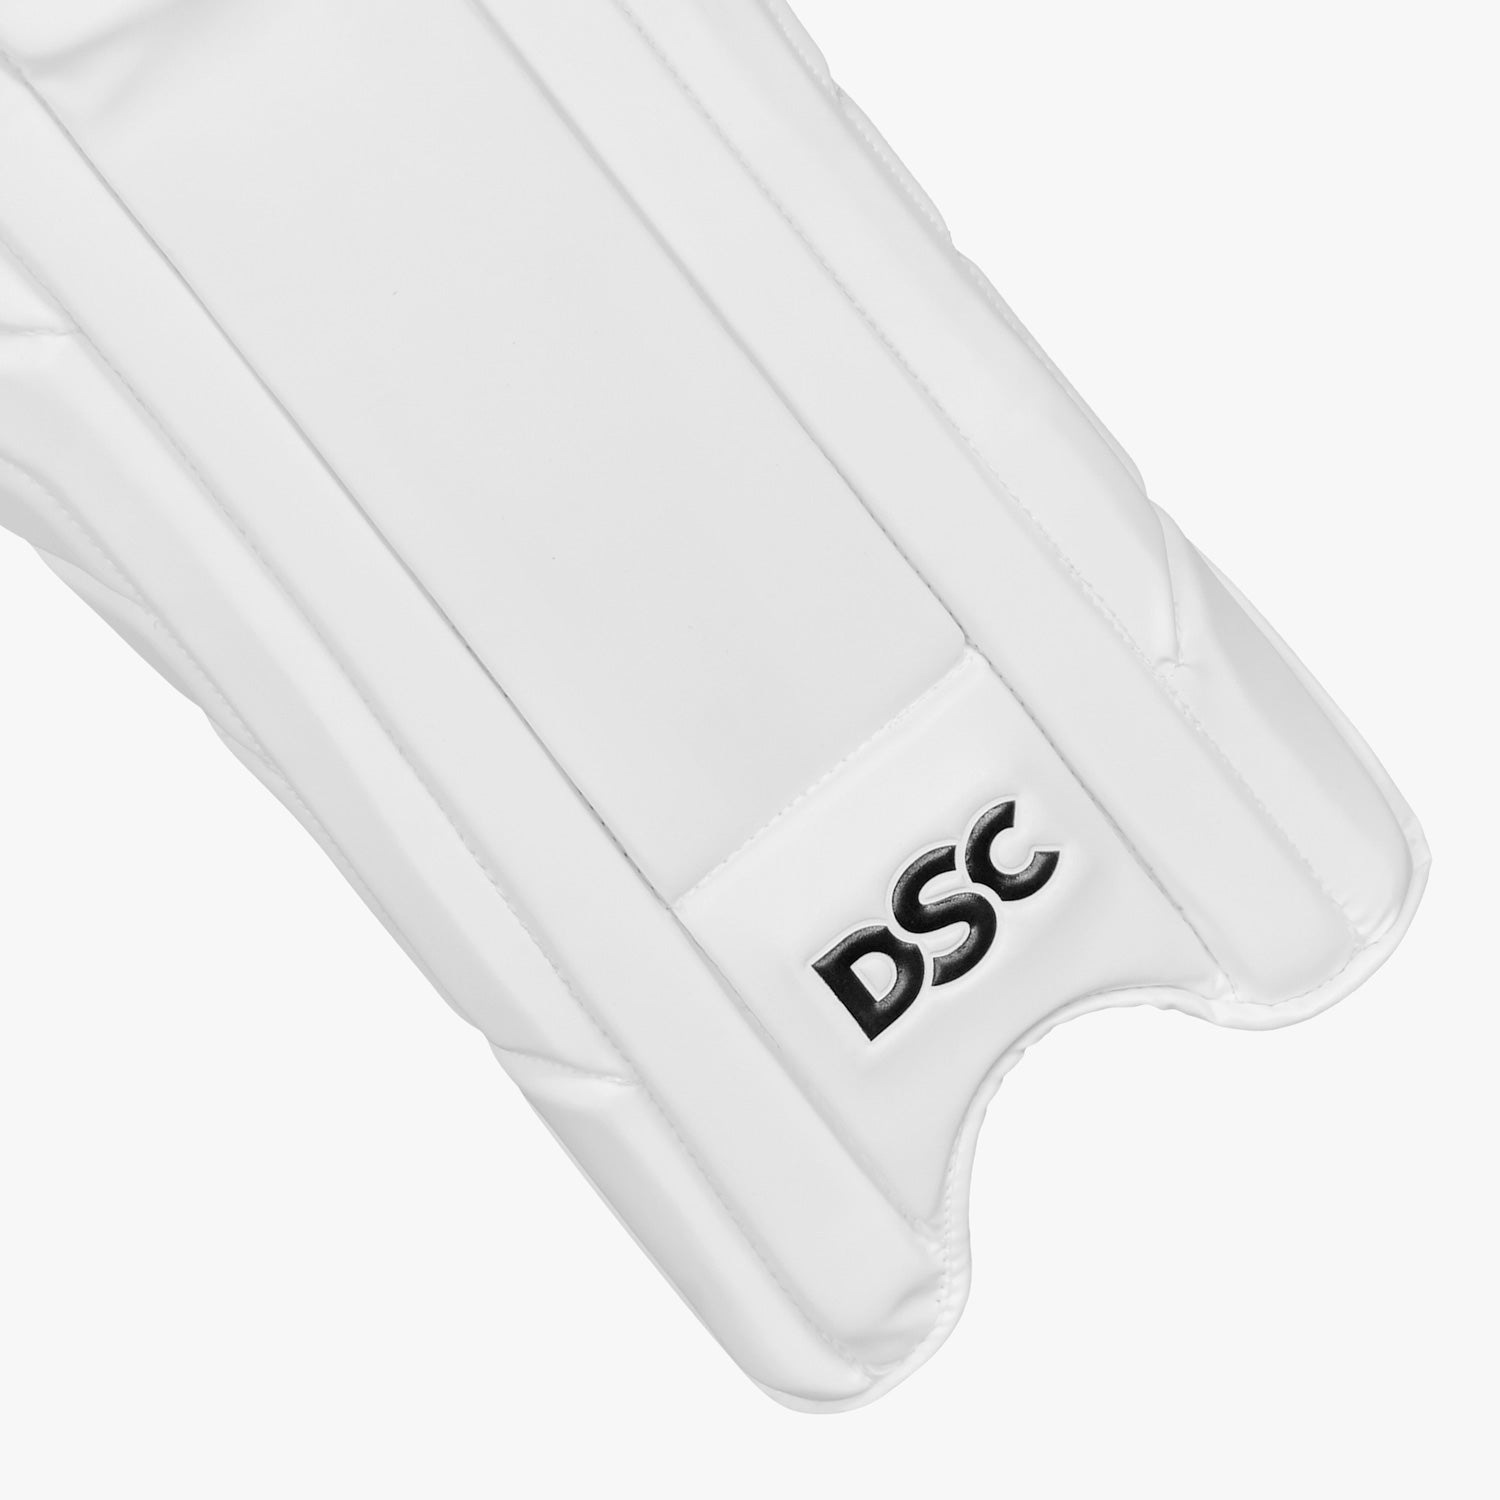 DSC Xlite 4.0 Batting Pads